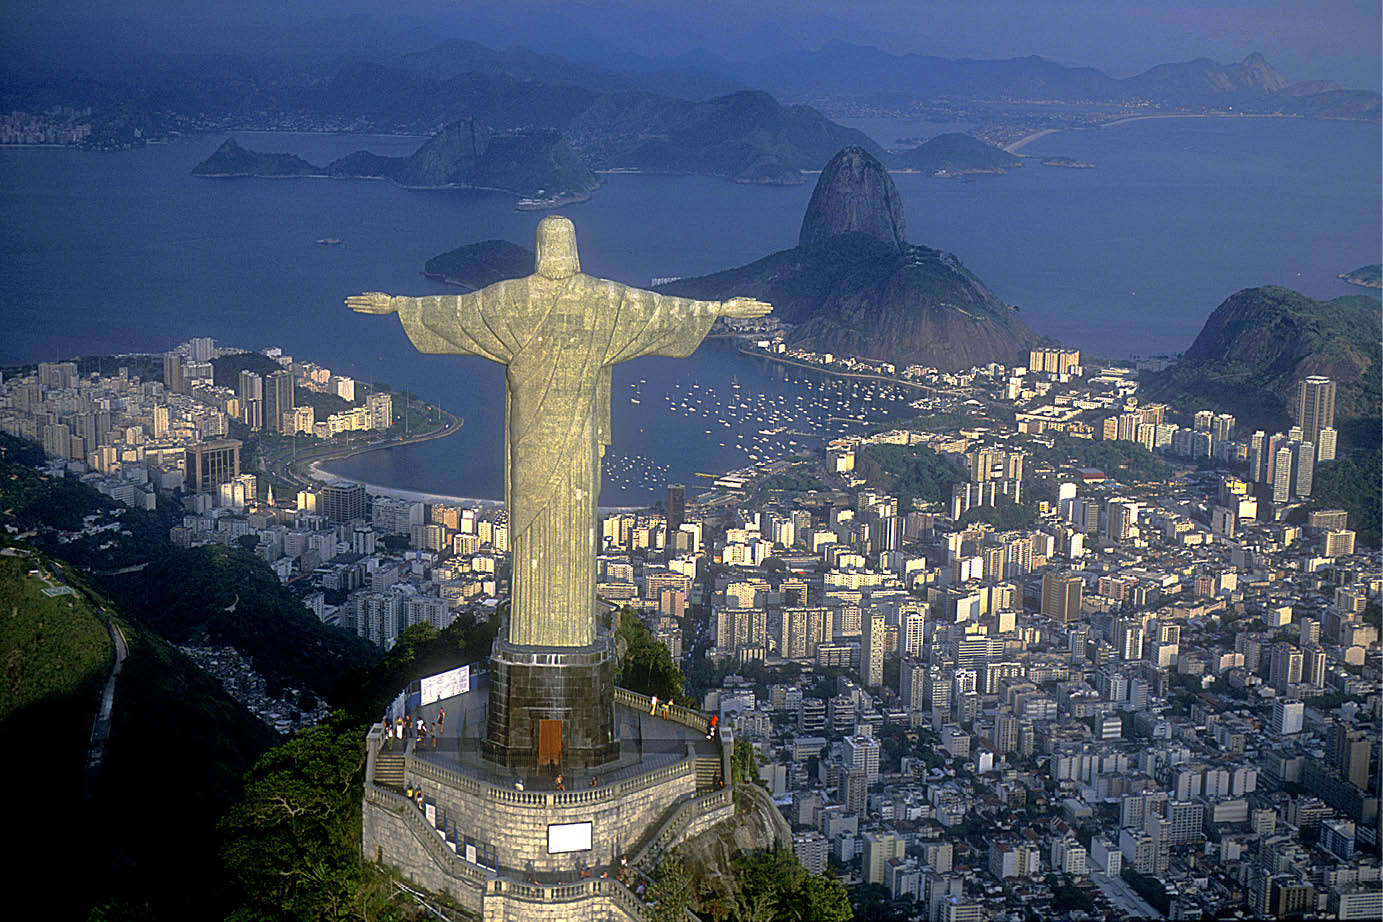 Rio de Janeiro, RJ, Brazil: Aerial view of Christ, symbol of Rio de Janeiro, standing on top of Corcovado Hill, overlooking Guanabara Bay